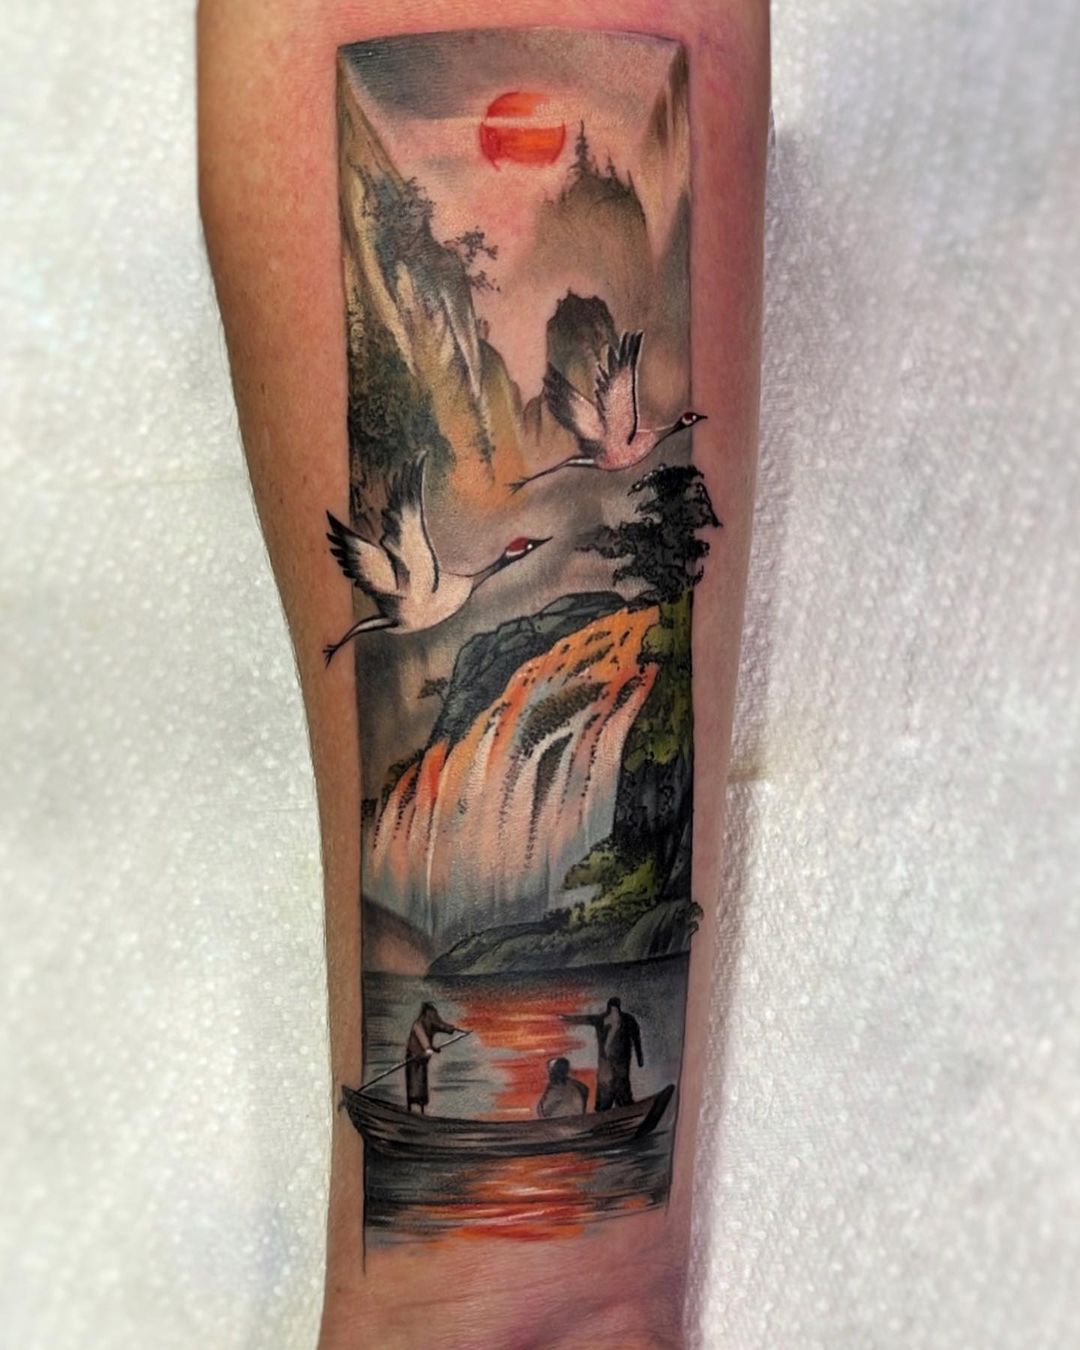 Colorful Japanese Crane Tattoo on Arm